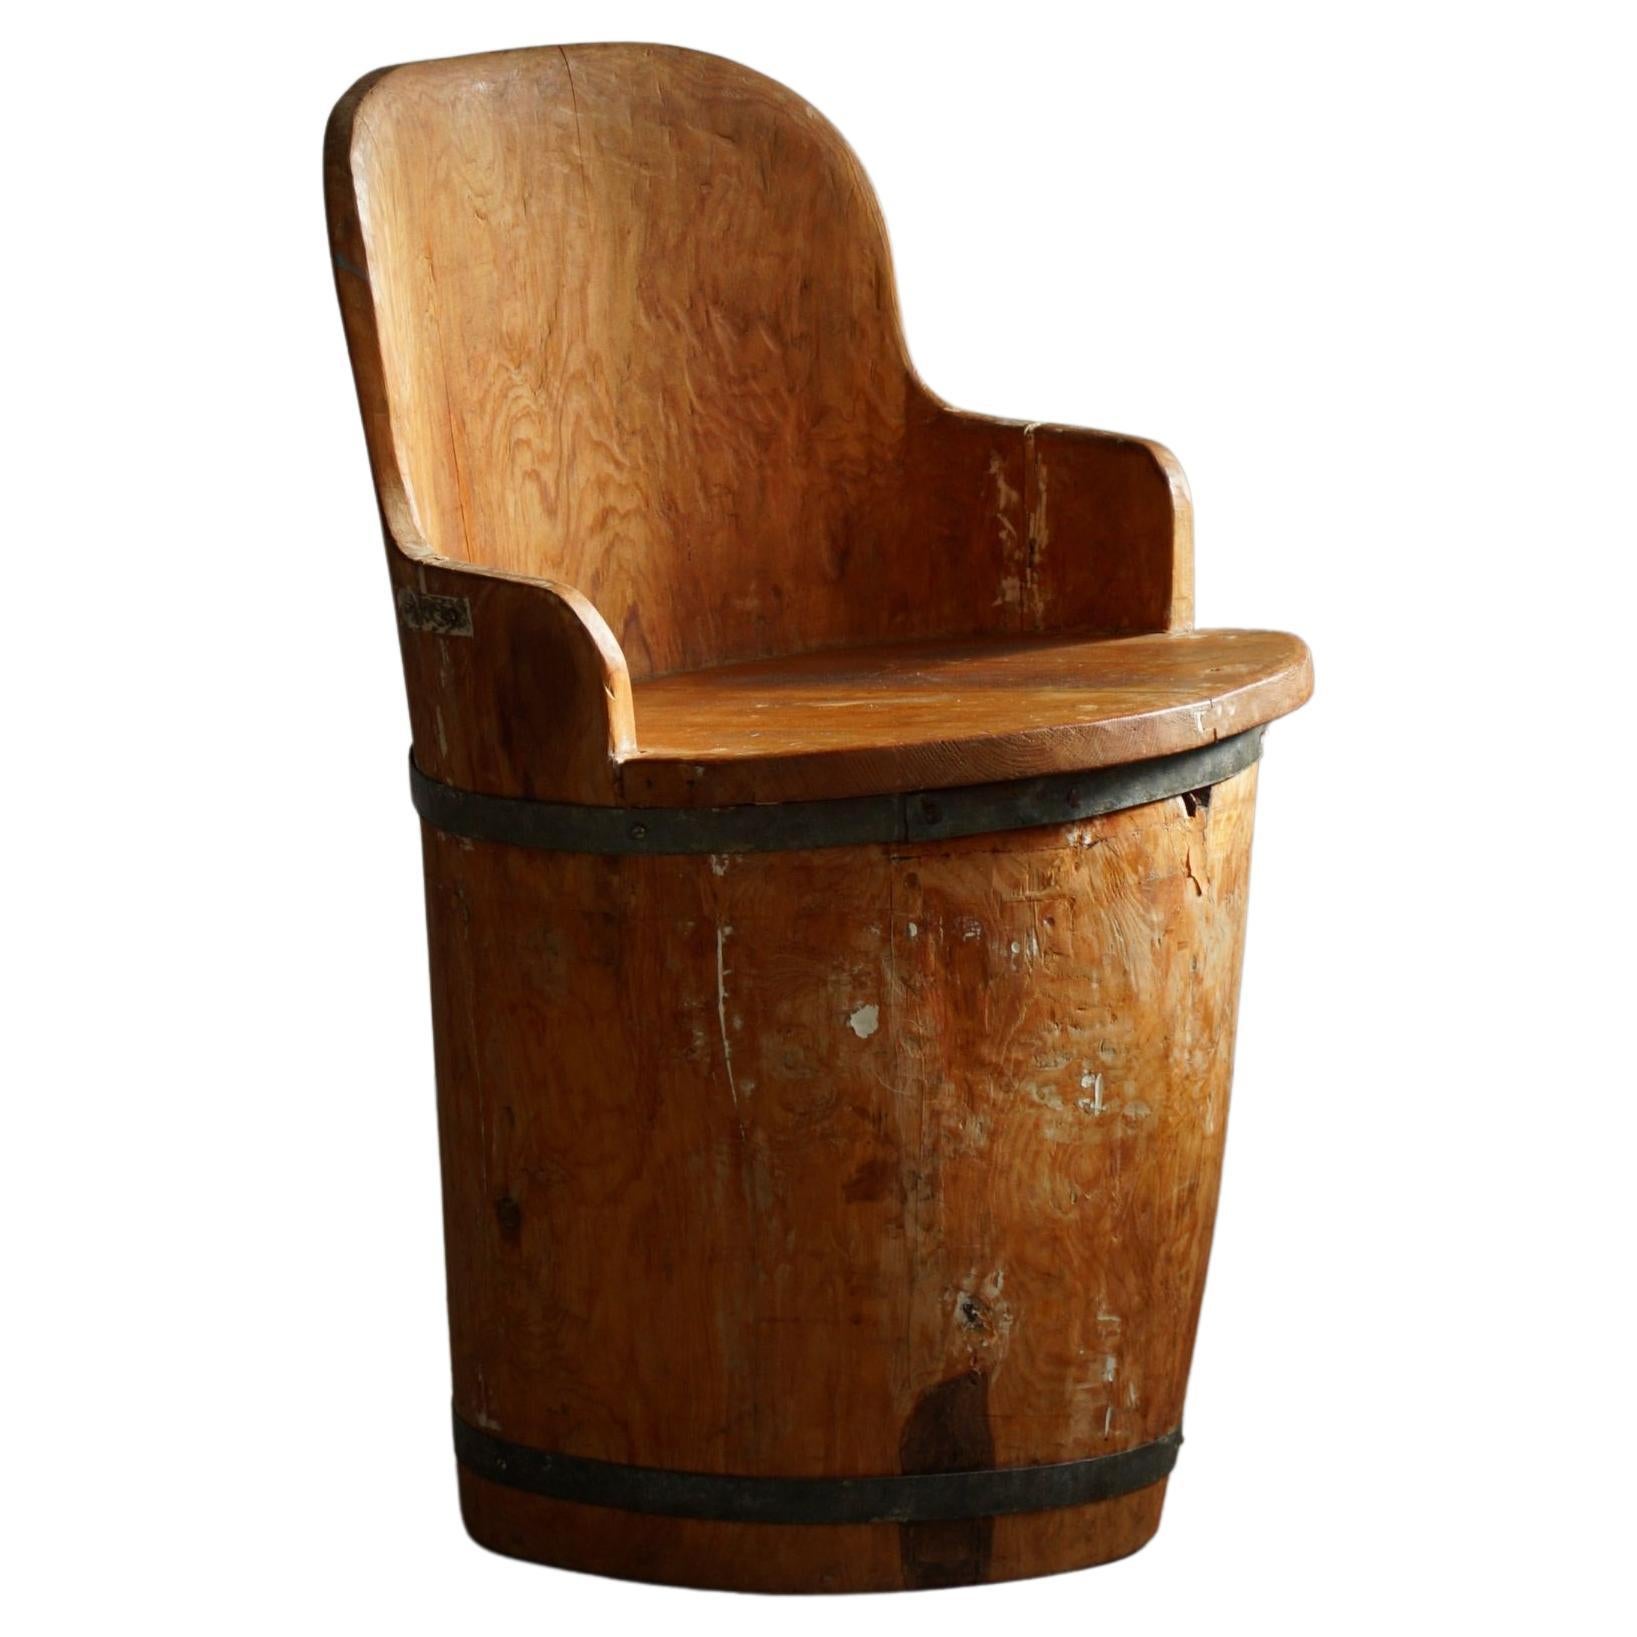 Mid 20th Century Wabi Sabi Stump Chair in Pine, by a Swedish Cabinetmaker, 1950s